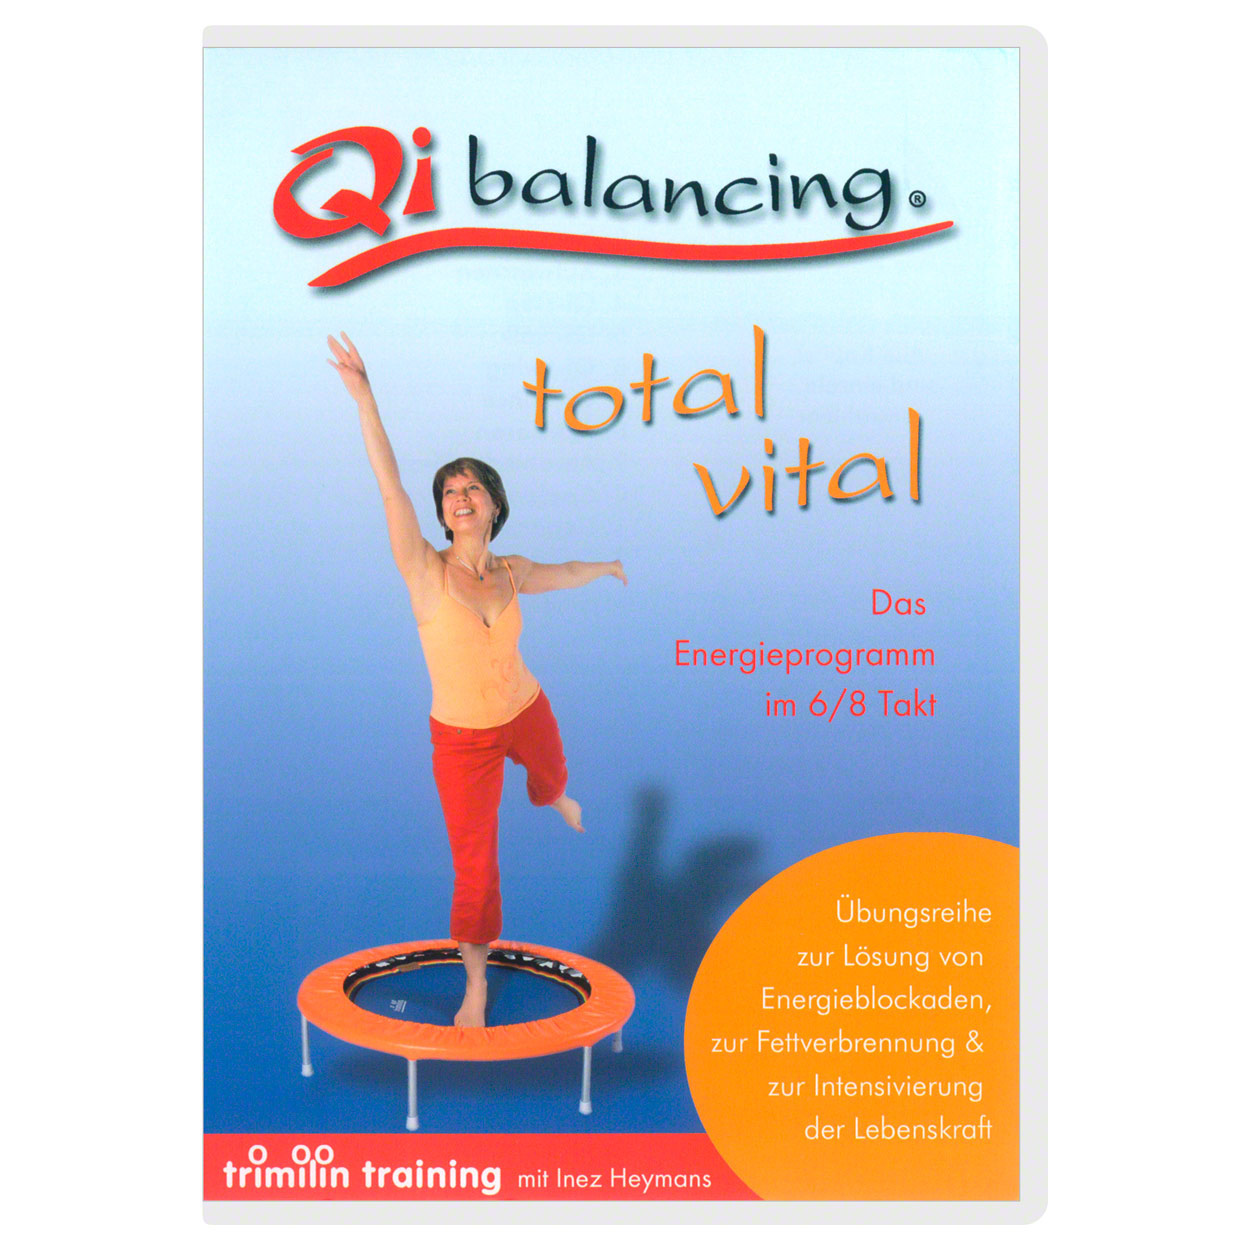 DVD Qibalancing - total vital<br> 65 Min.